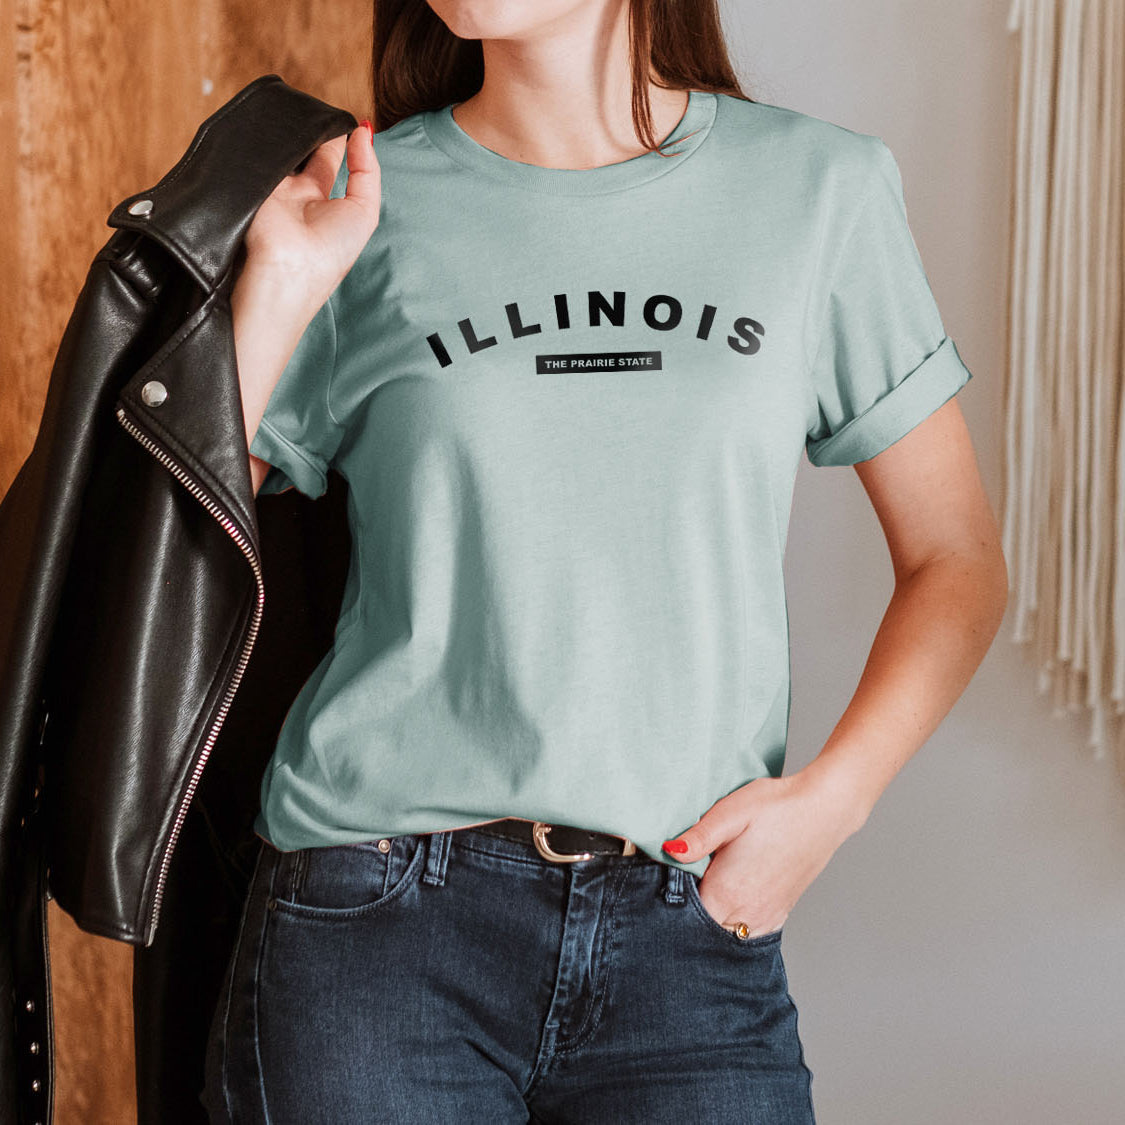 Illinois The Prairie State T-shirt - United States Name & Slogan Minimal Design Printed Tee Shirt